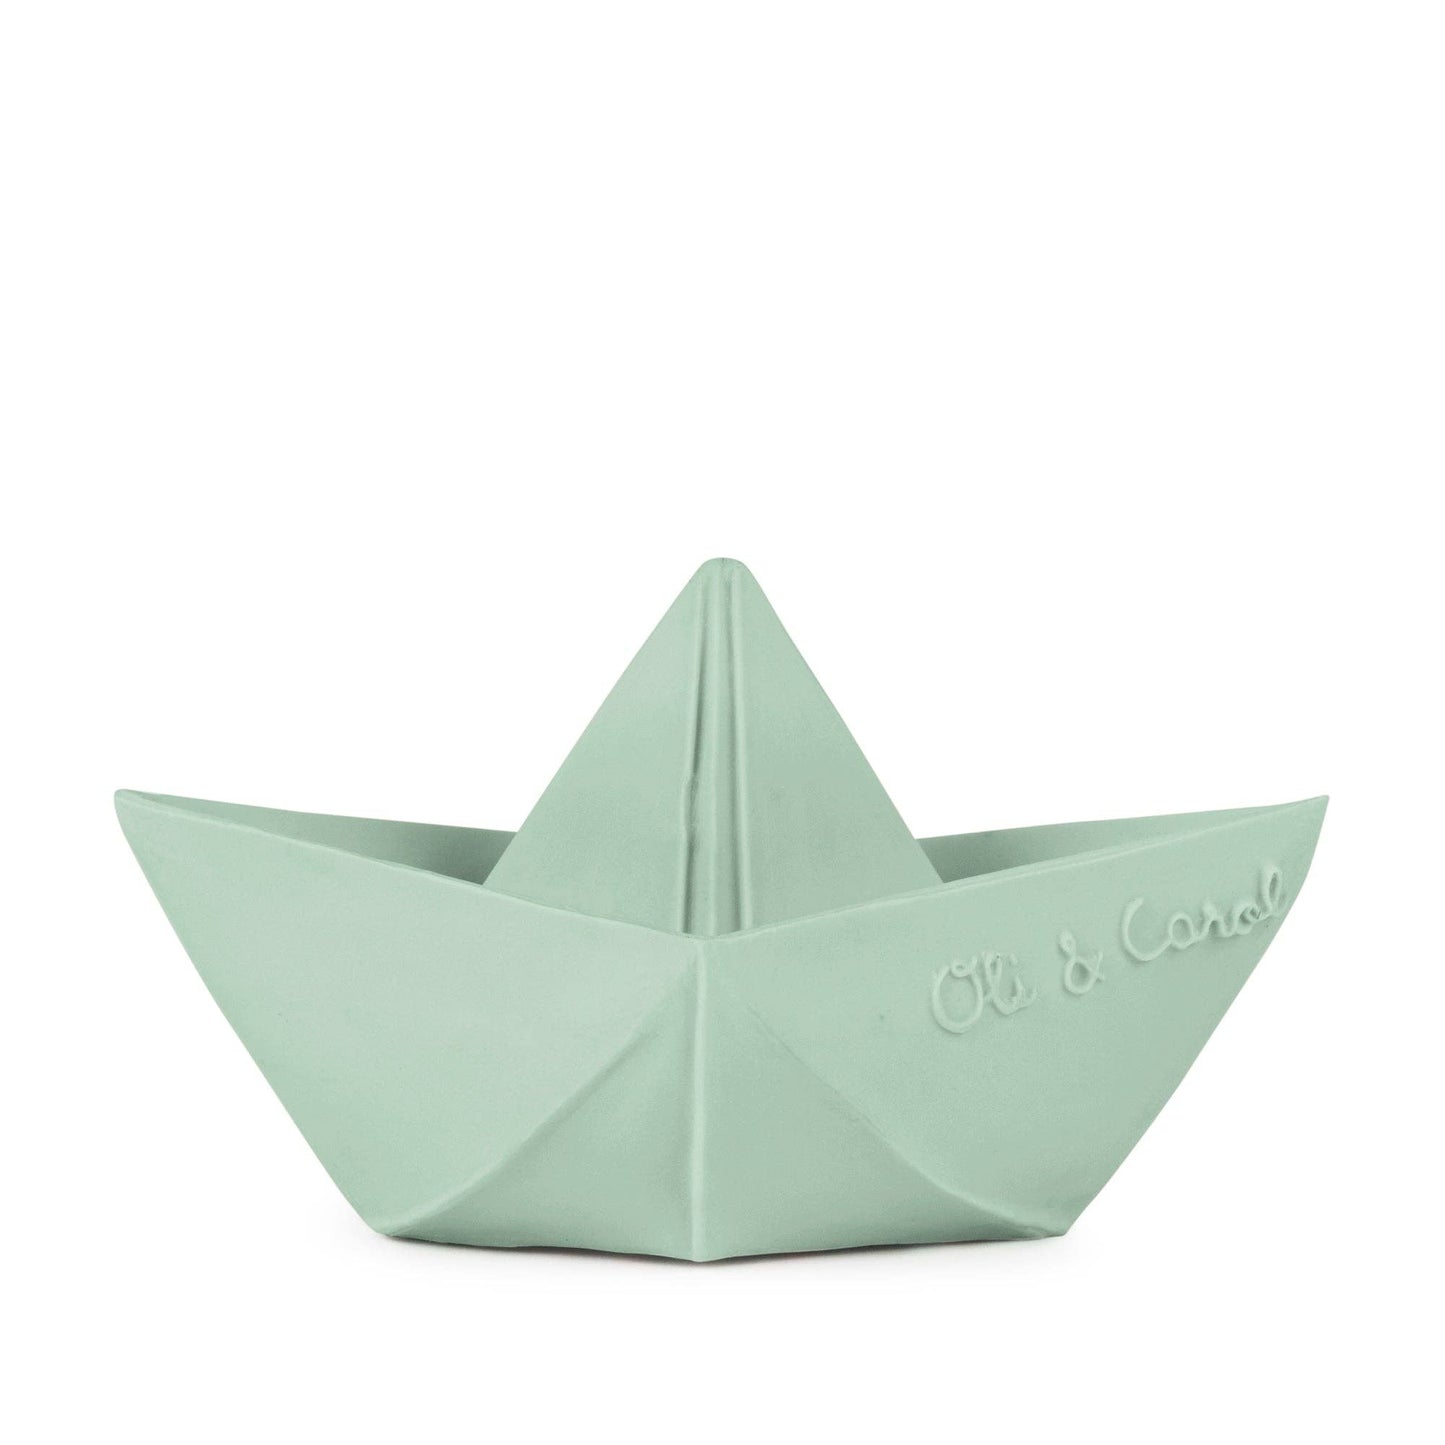 Mint Origami Boat